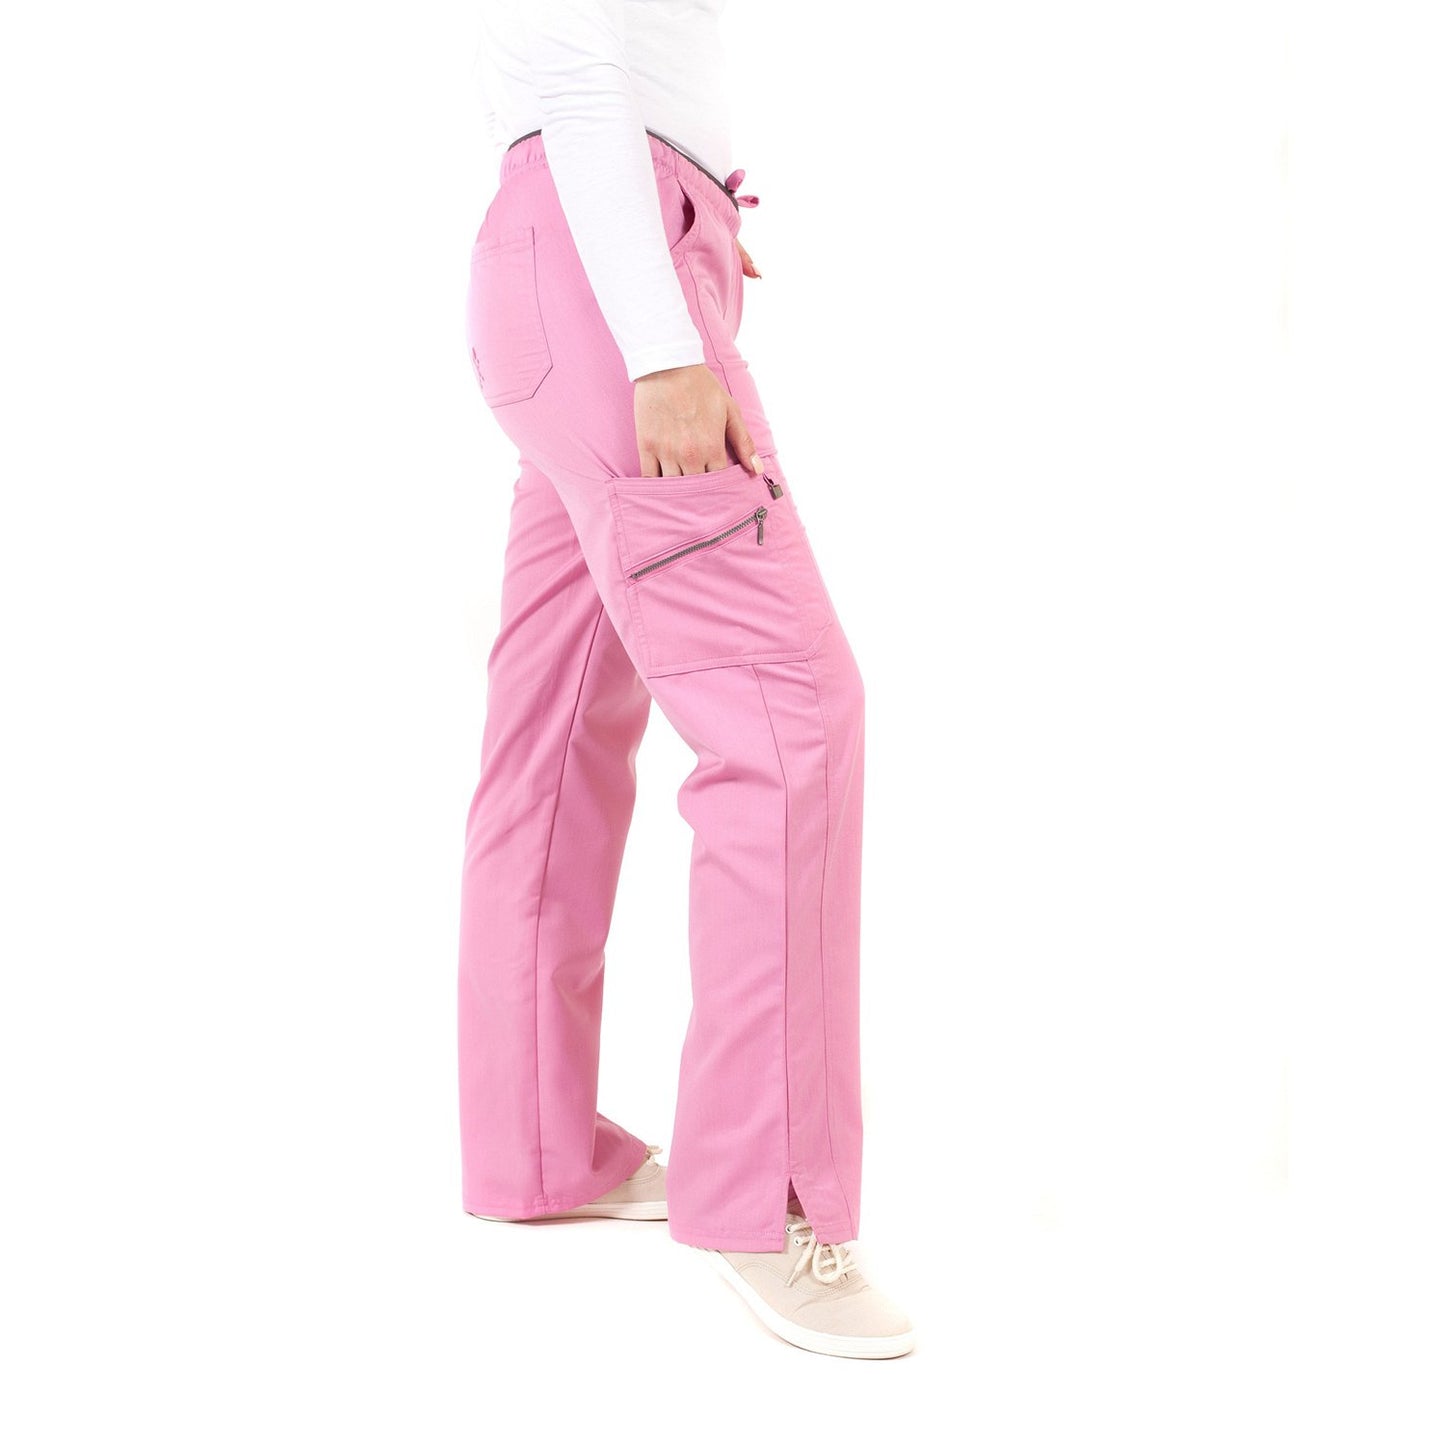 Women’s Ergo 2.0 Fashion Cargo Pants - Tall